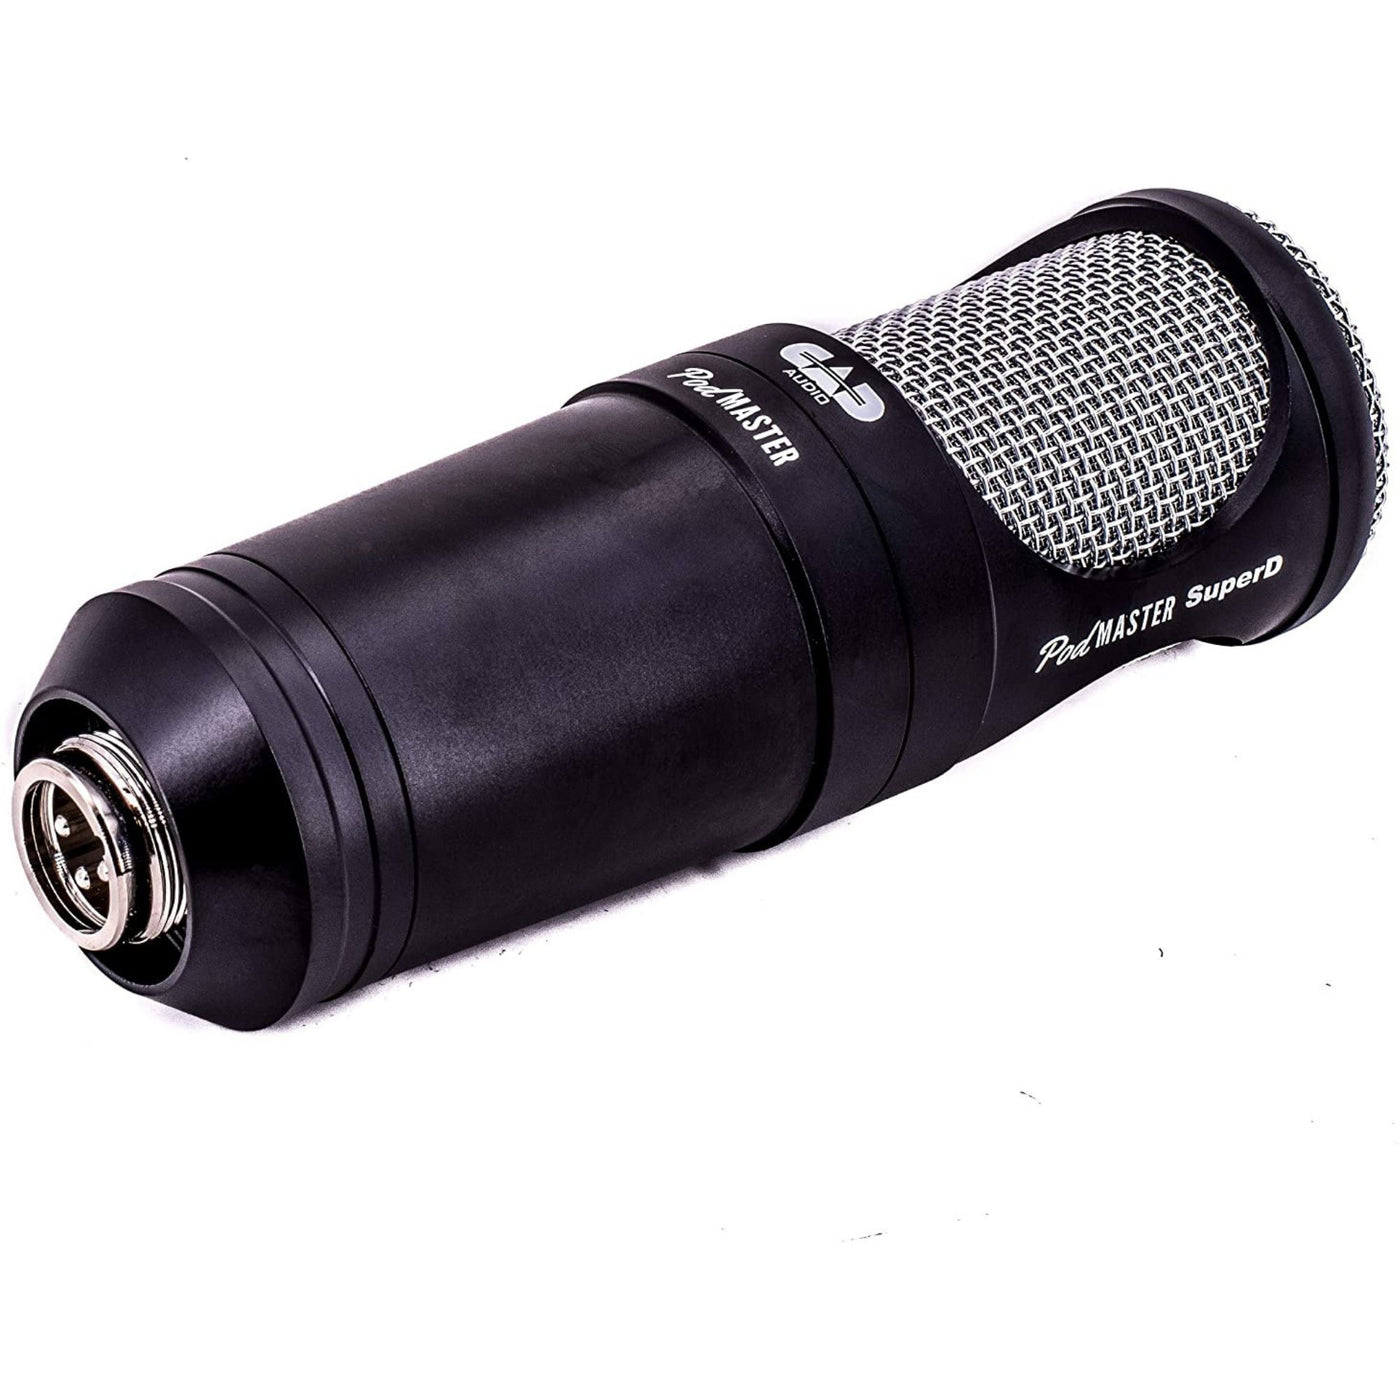 CAD Audio PM1200 PodMaster Super D Professional Microphone - XLR Version (PM1200)